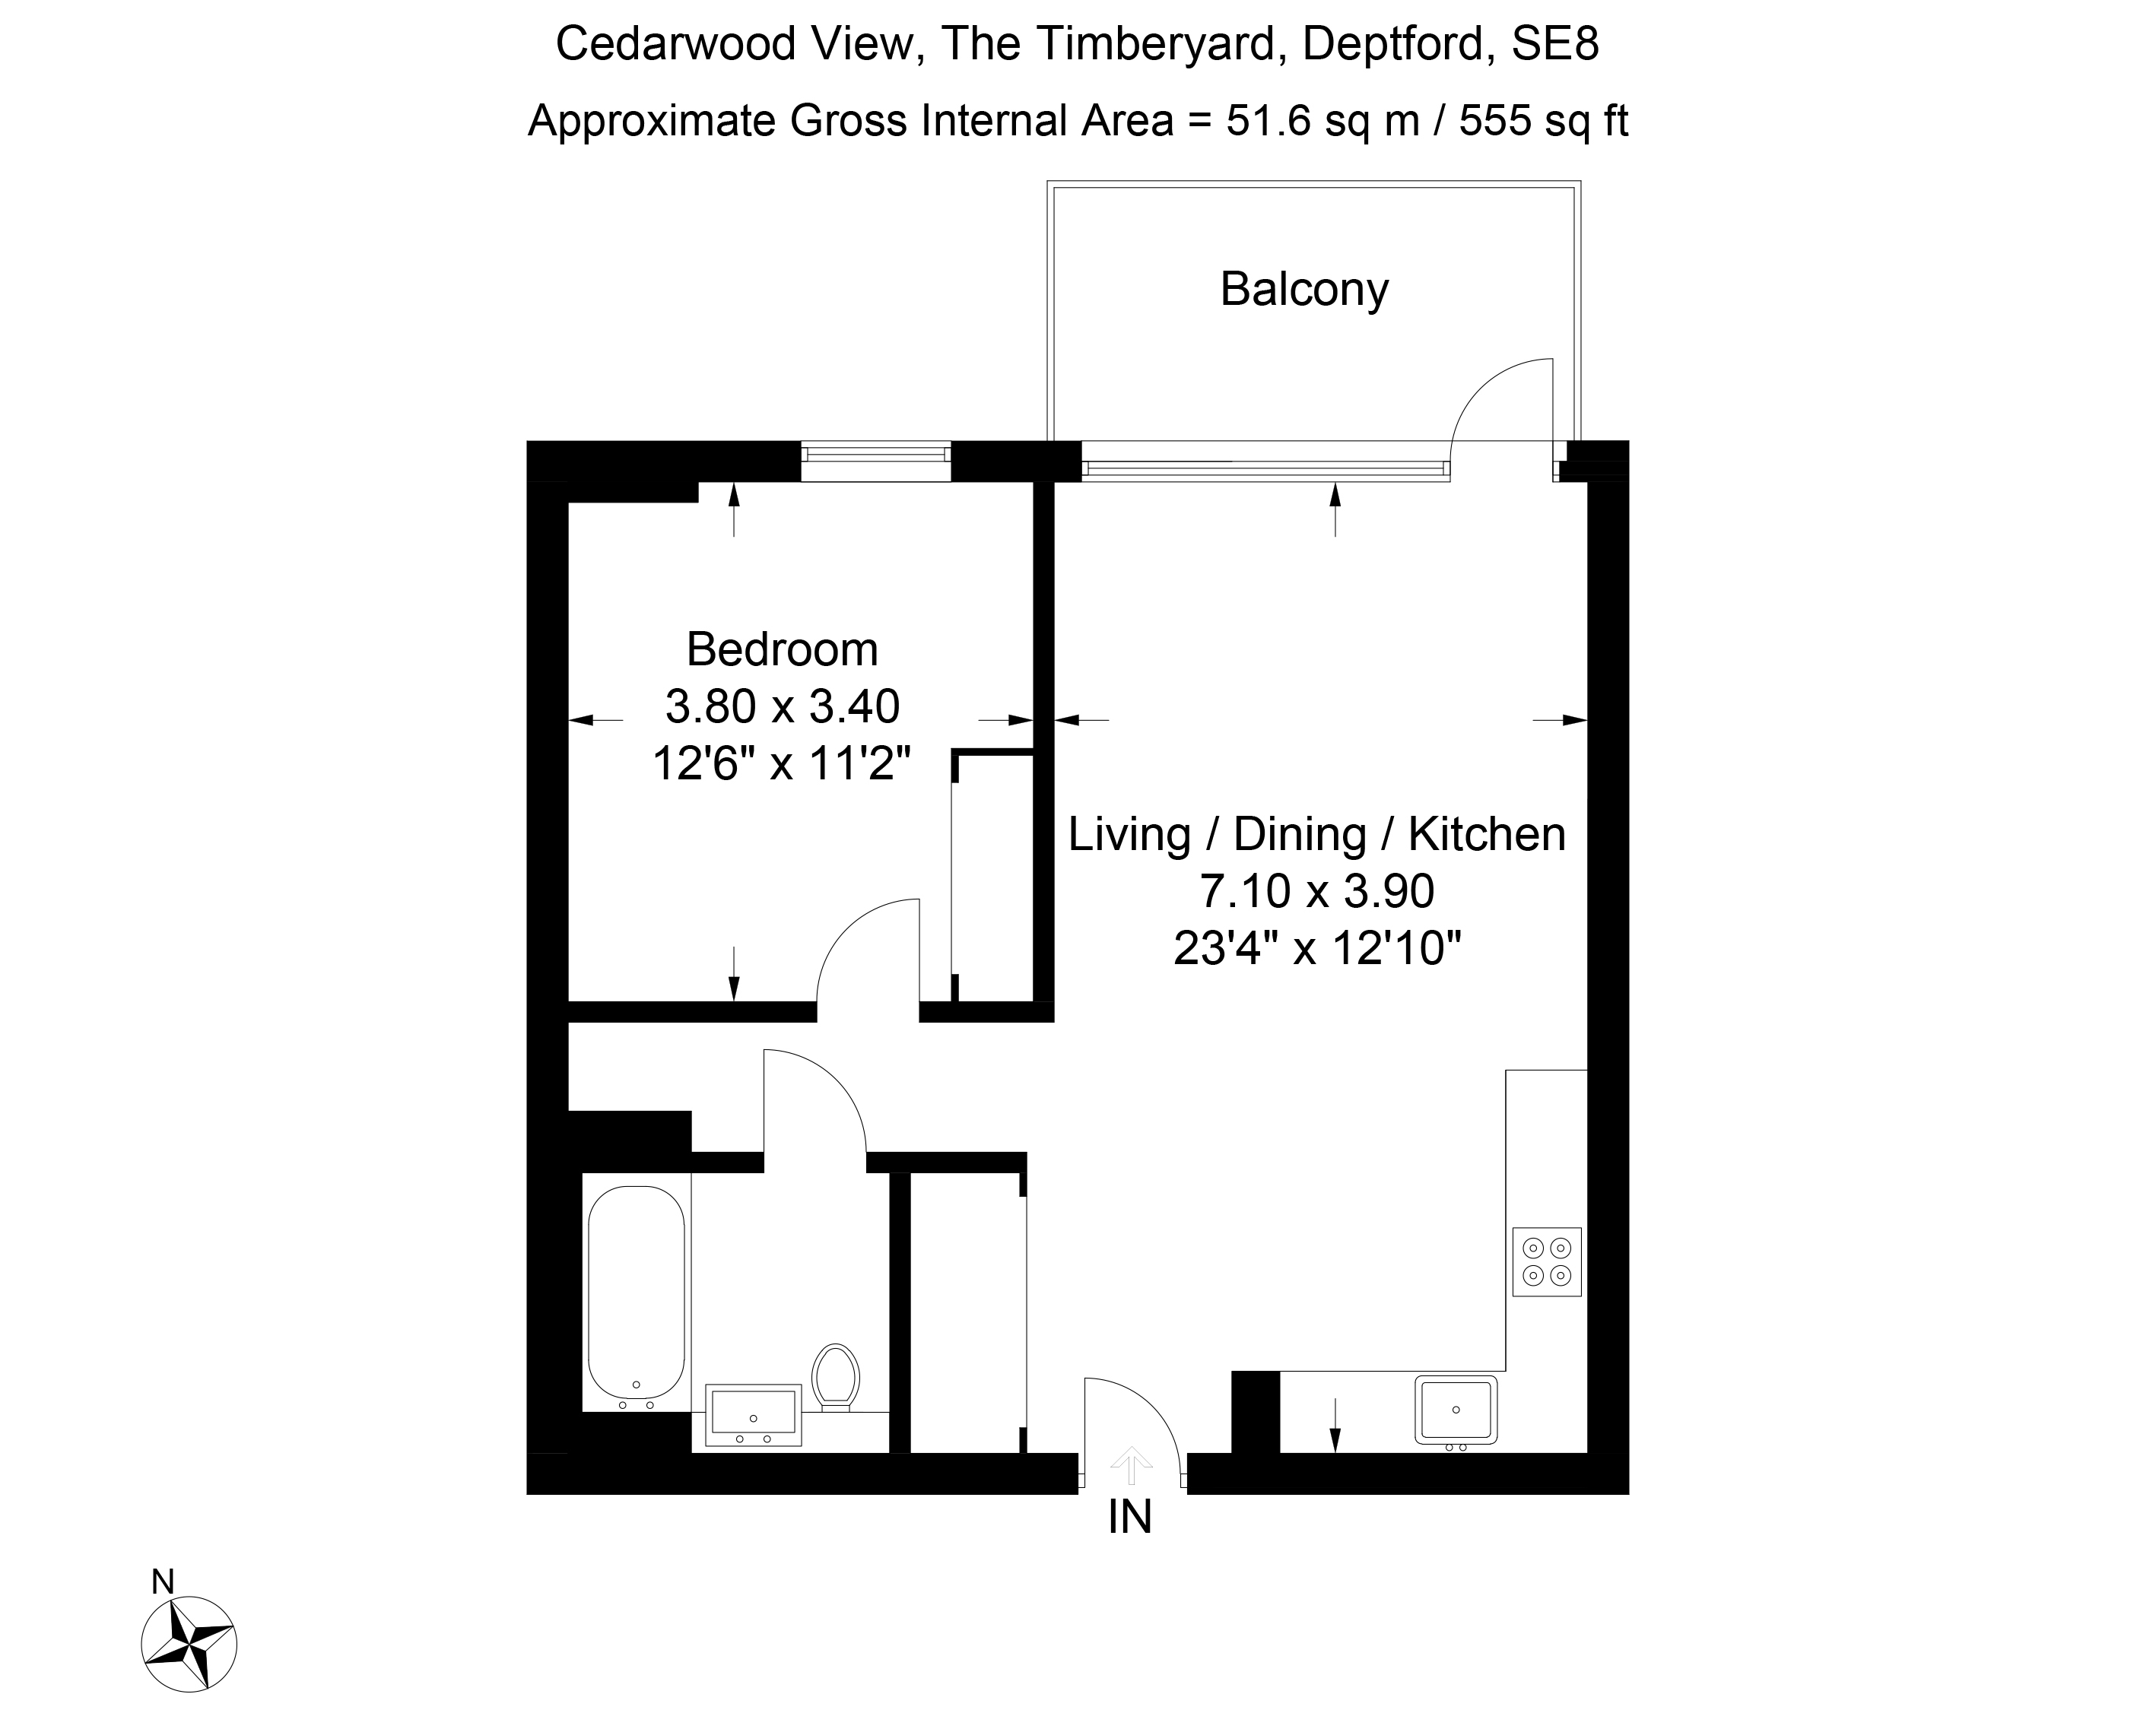 The Timberyard one bedroom floor plan